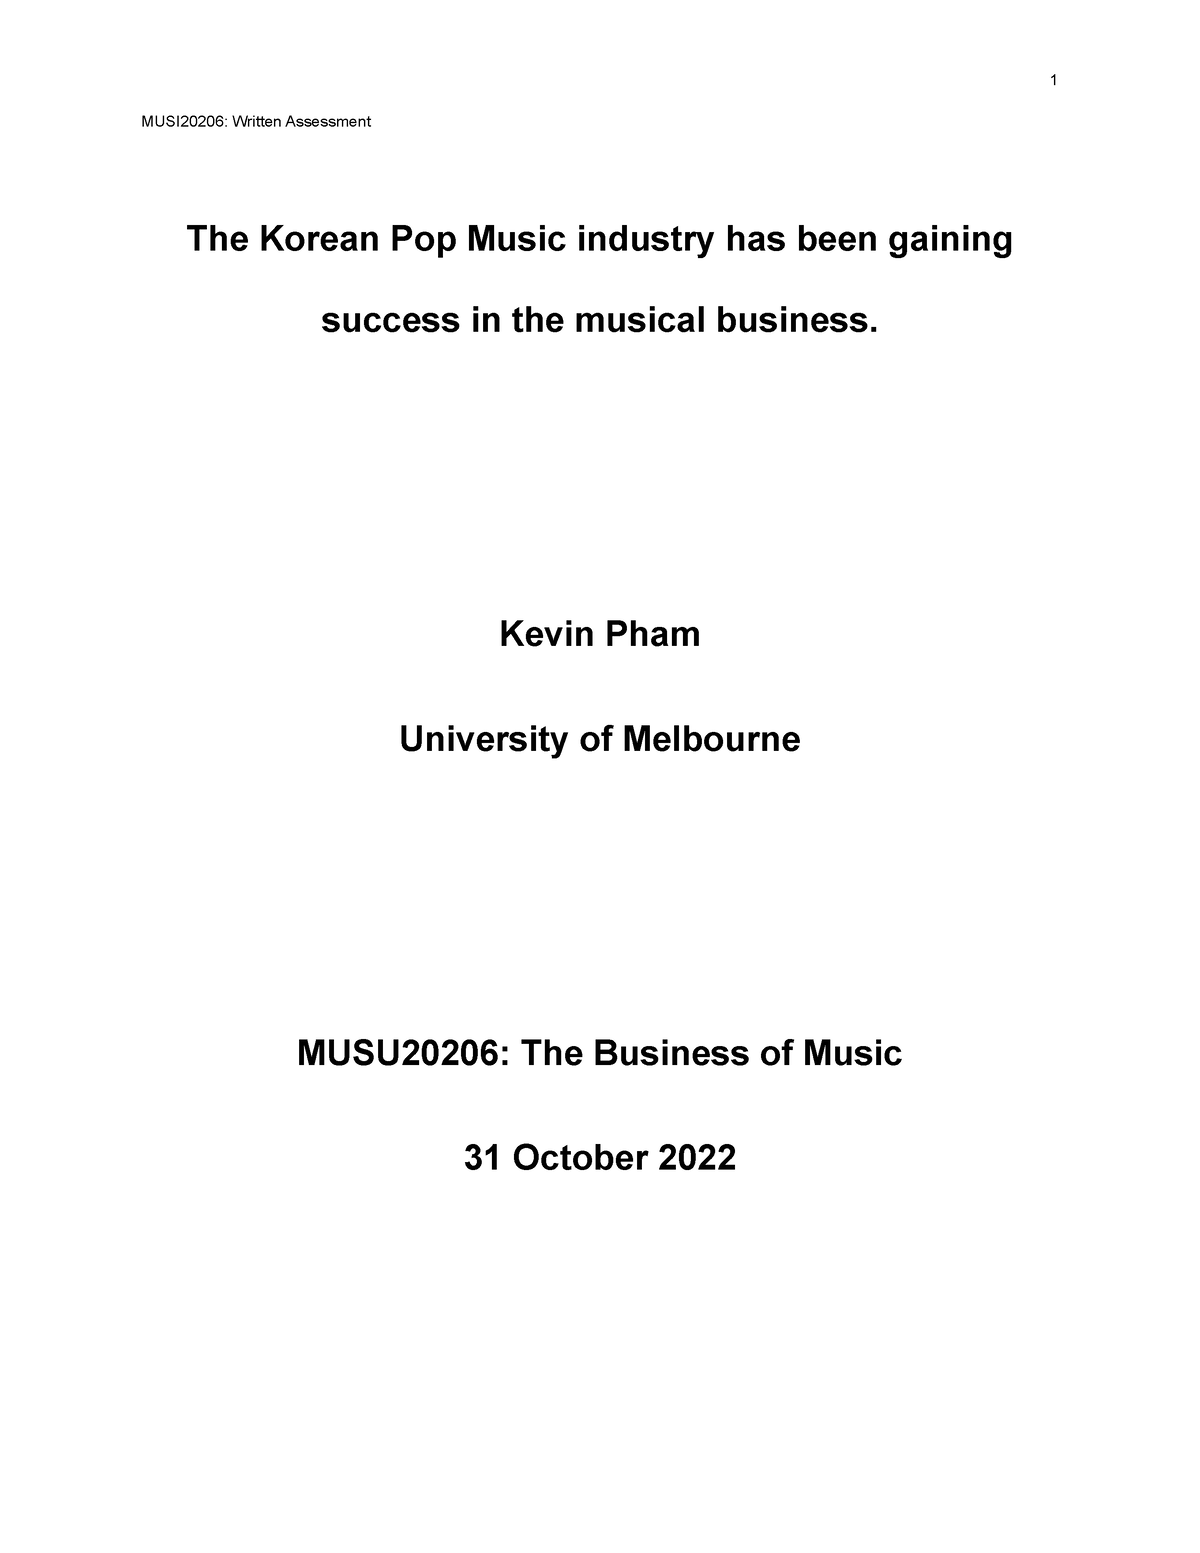 kpop music essay